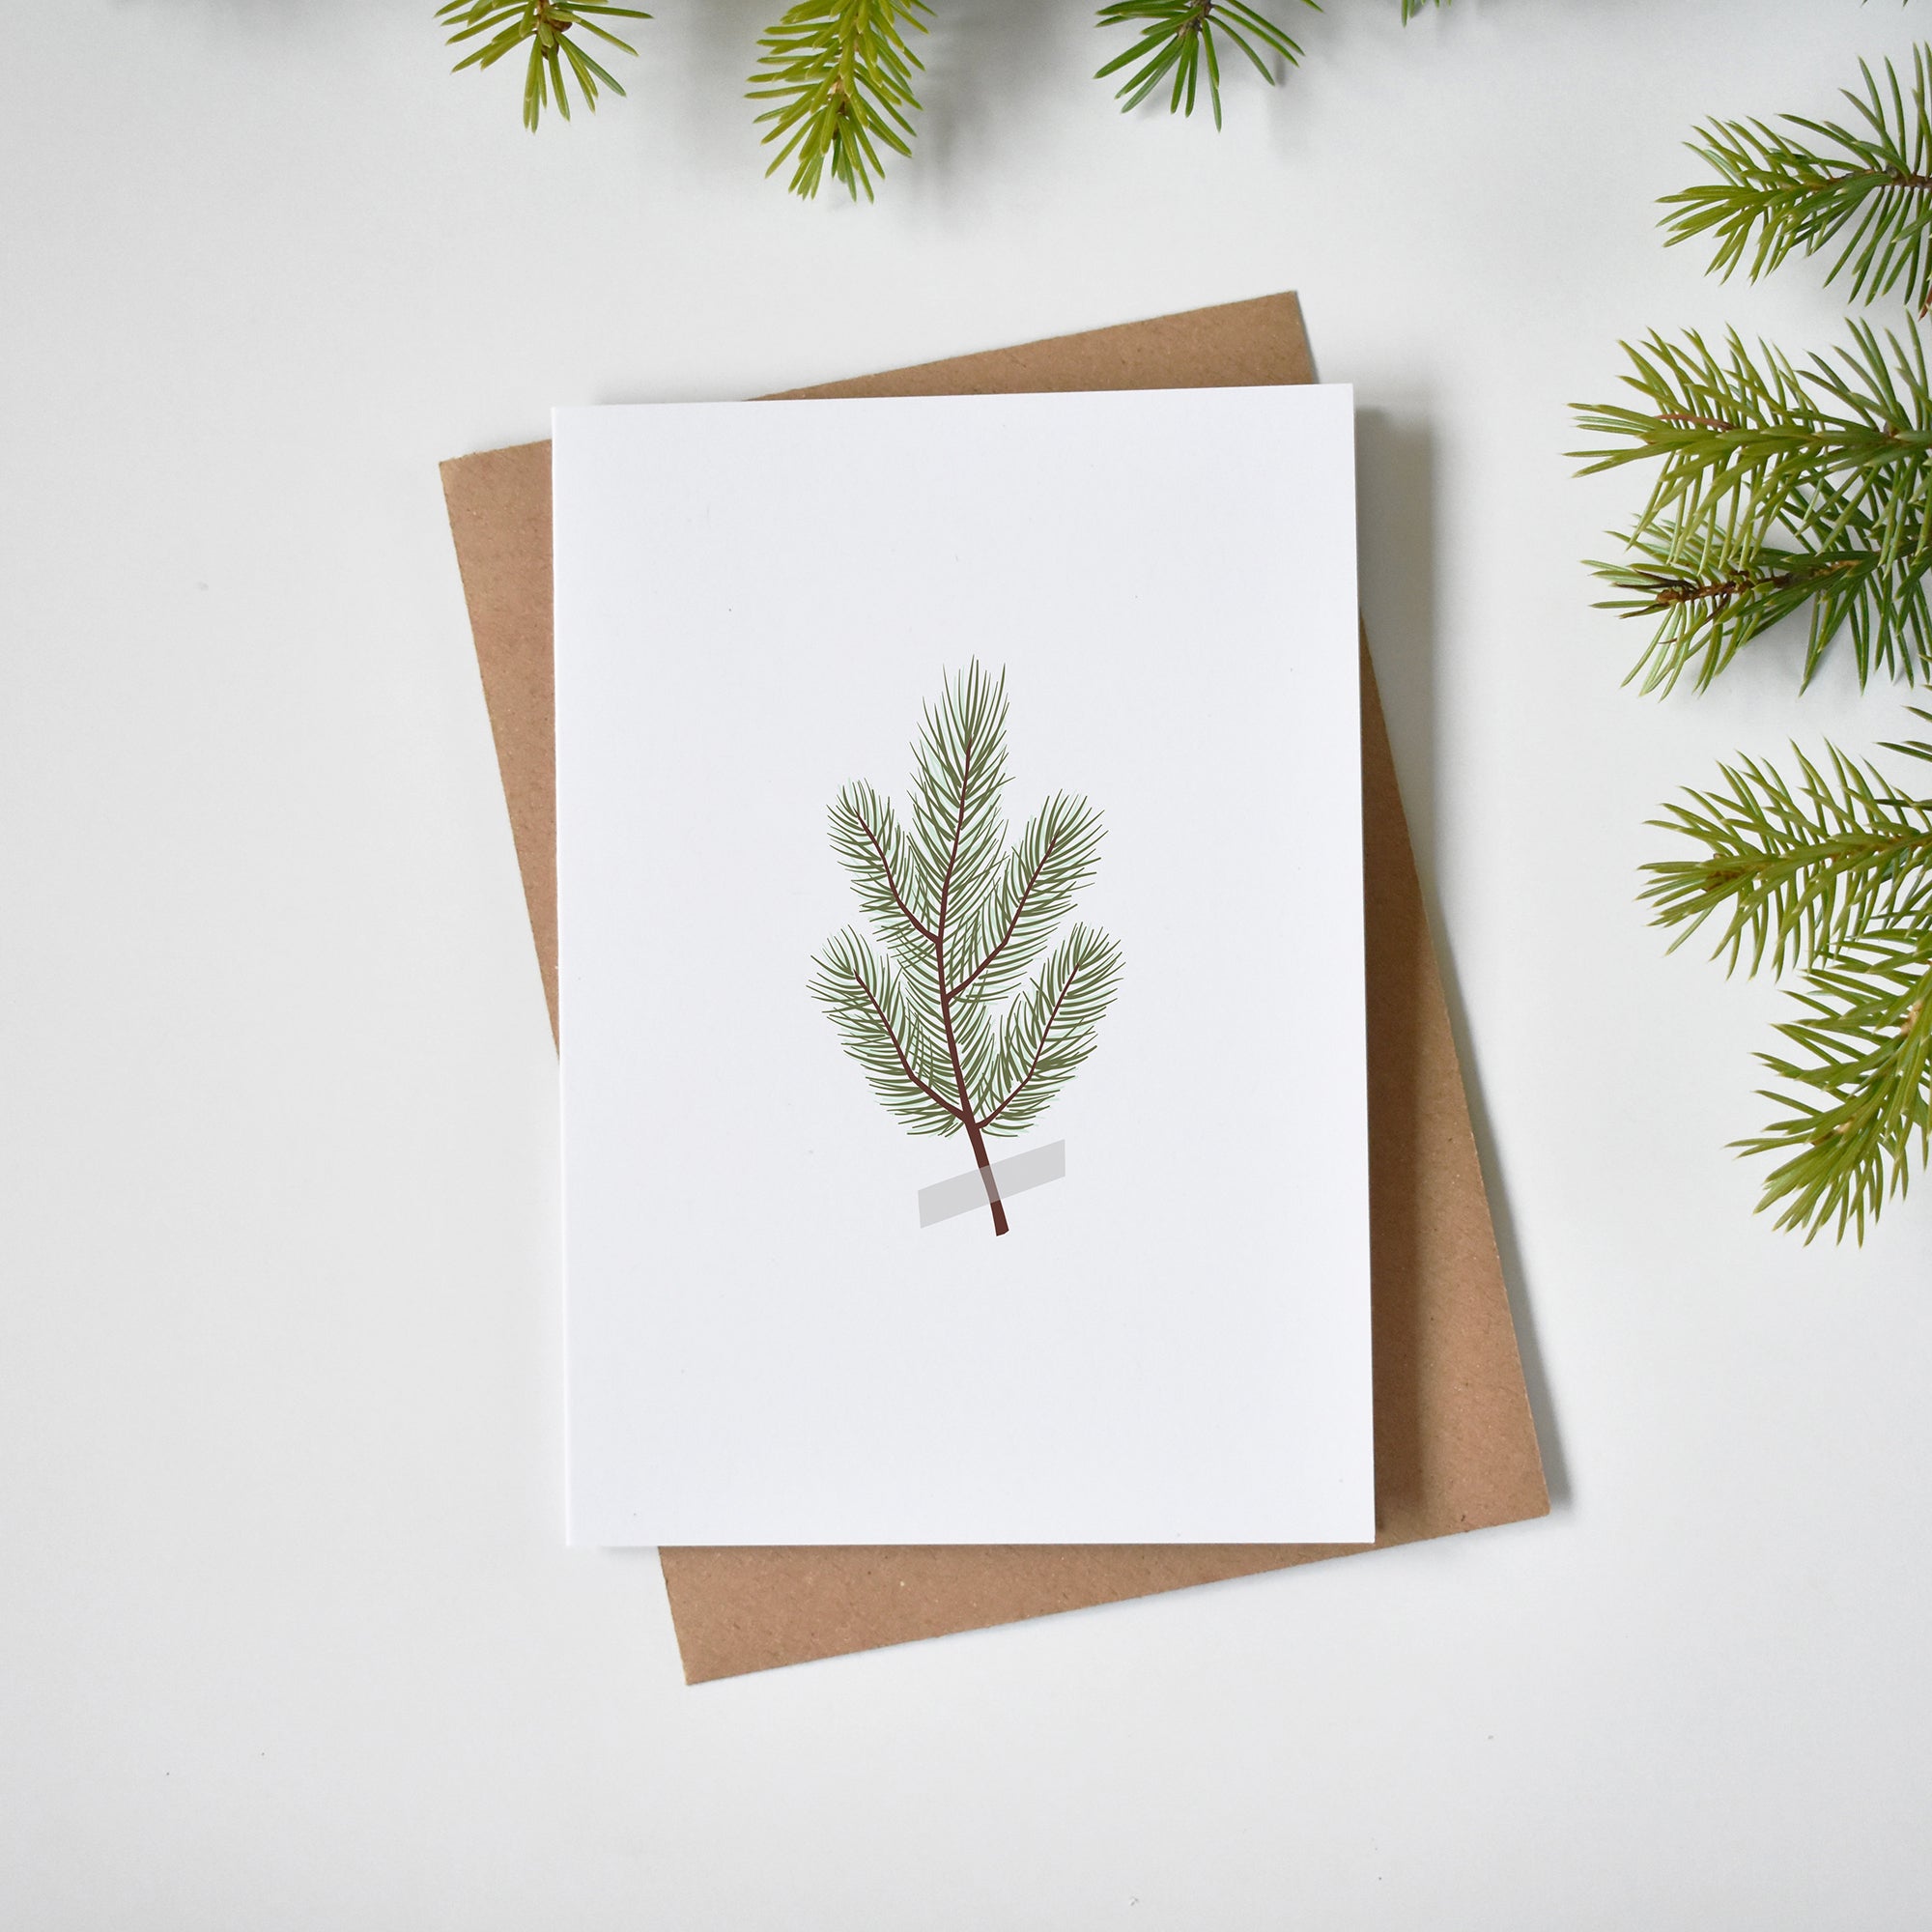 Pine branch Christmas card elemente design